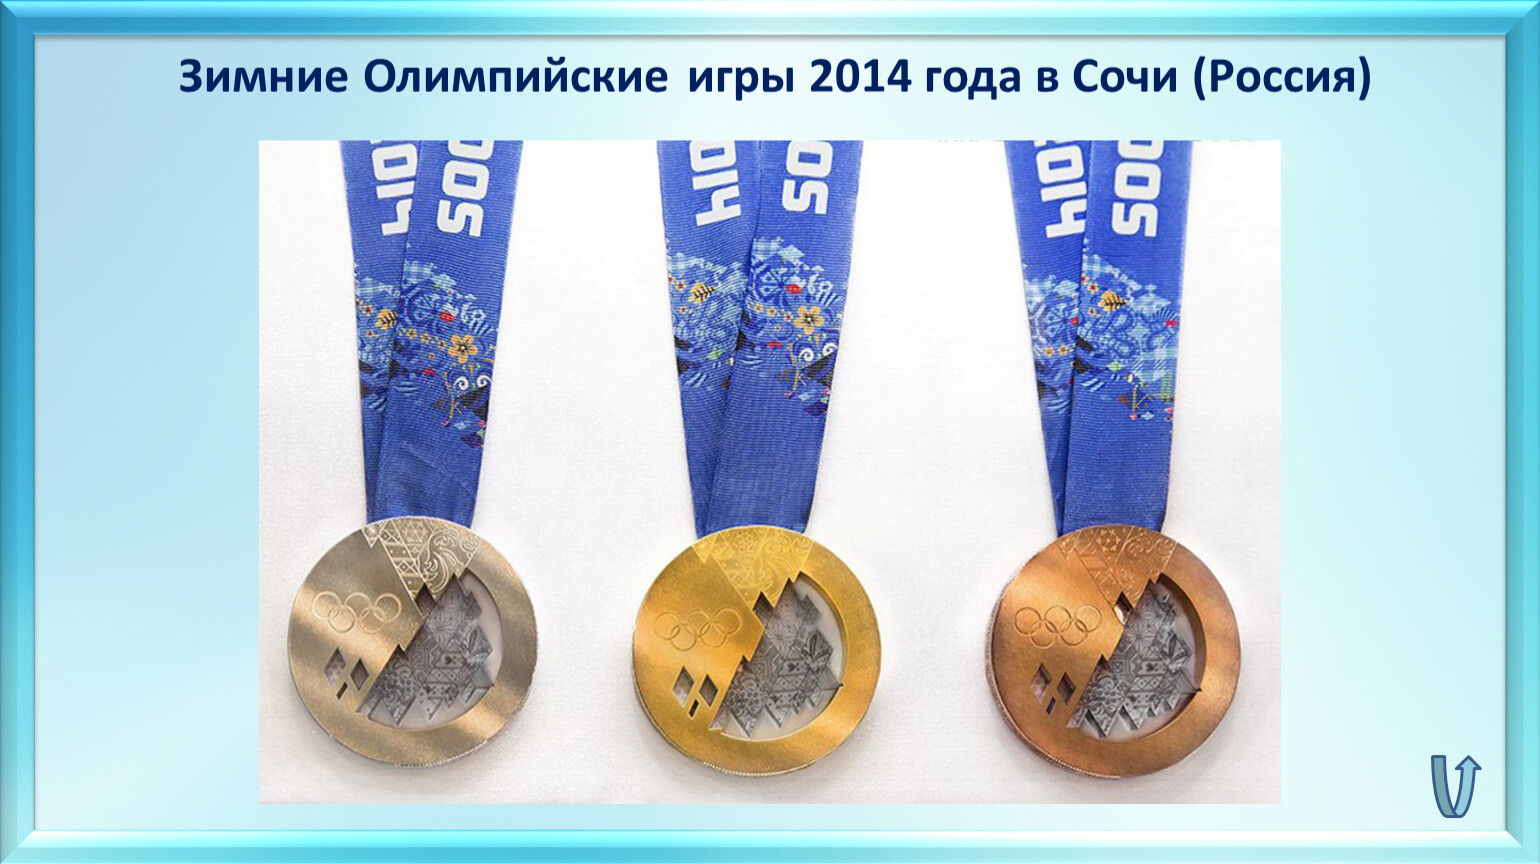 Медалей зимних олимпийских игр 2014. Медали Олимпийских игр 2014. Медали Сочи 2014. Олимпийские медали Сочи.